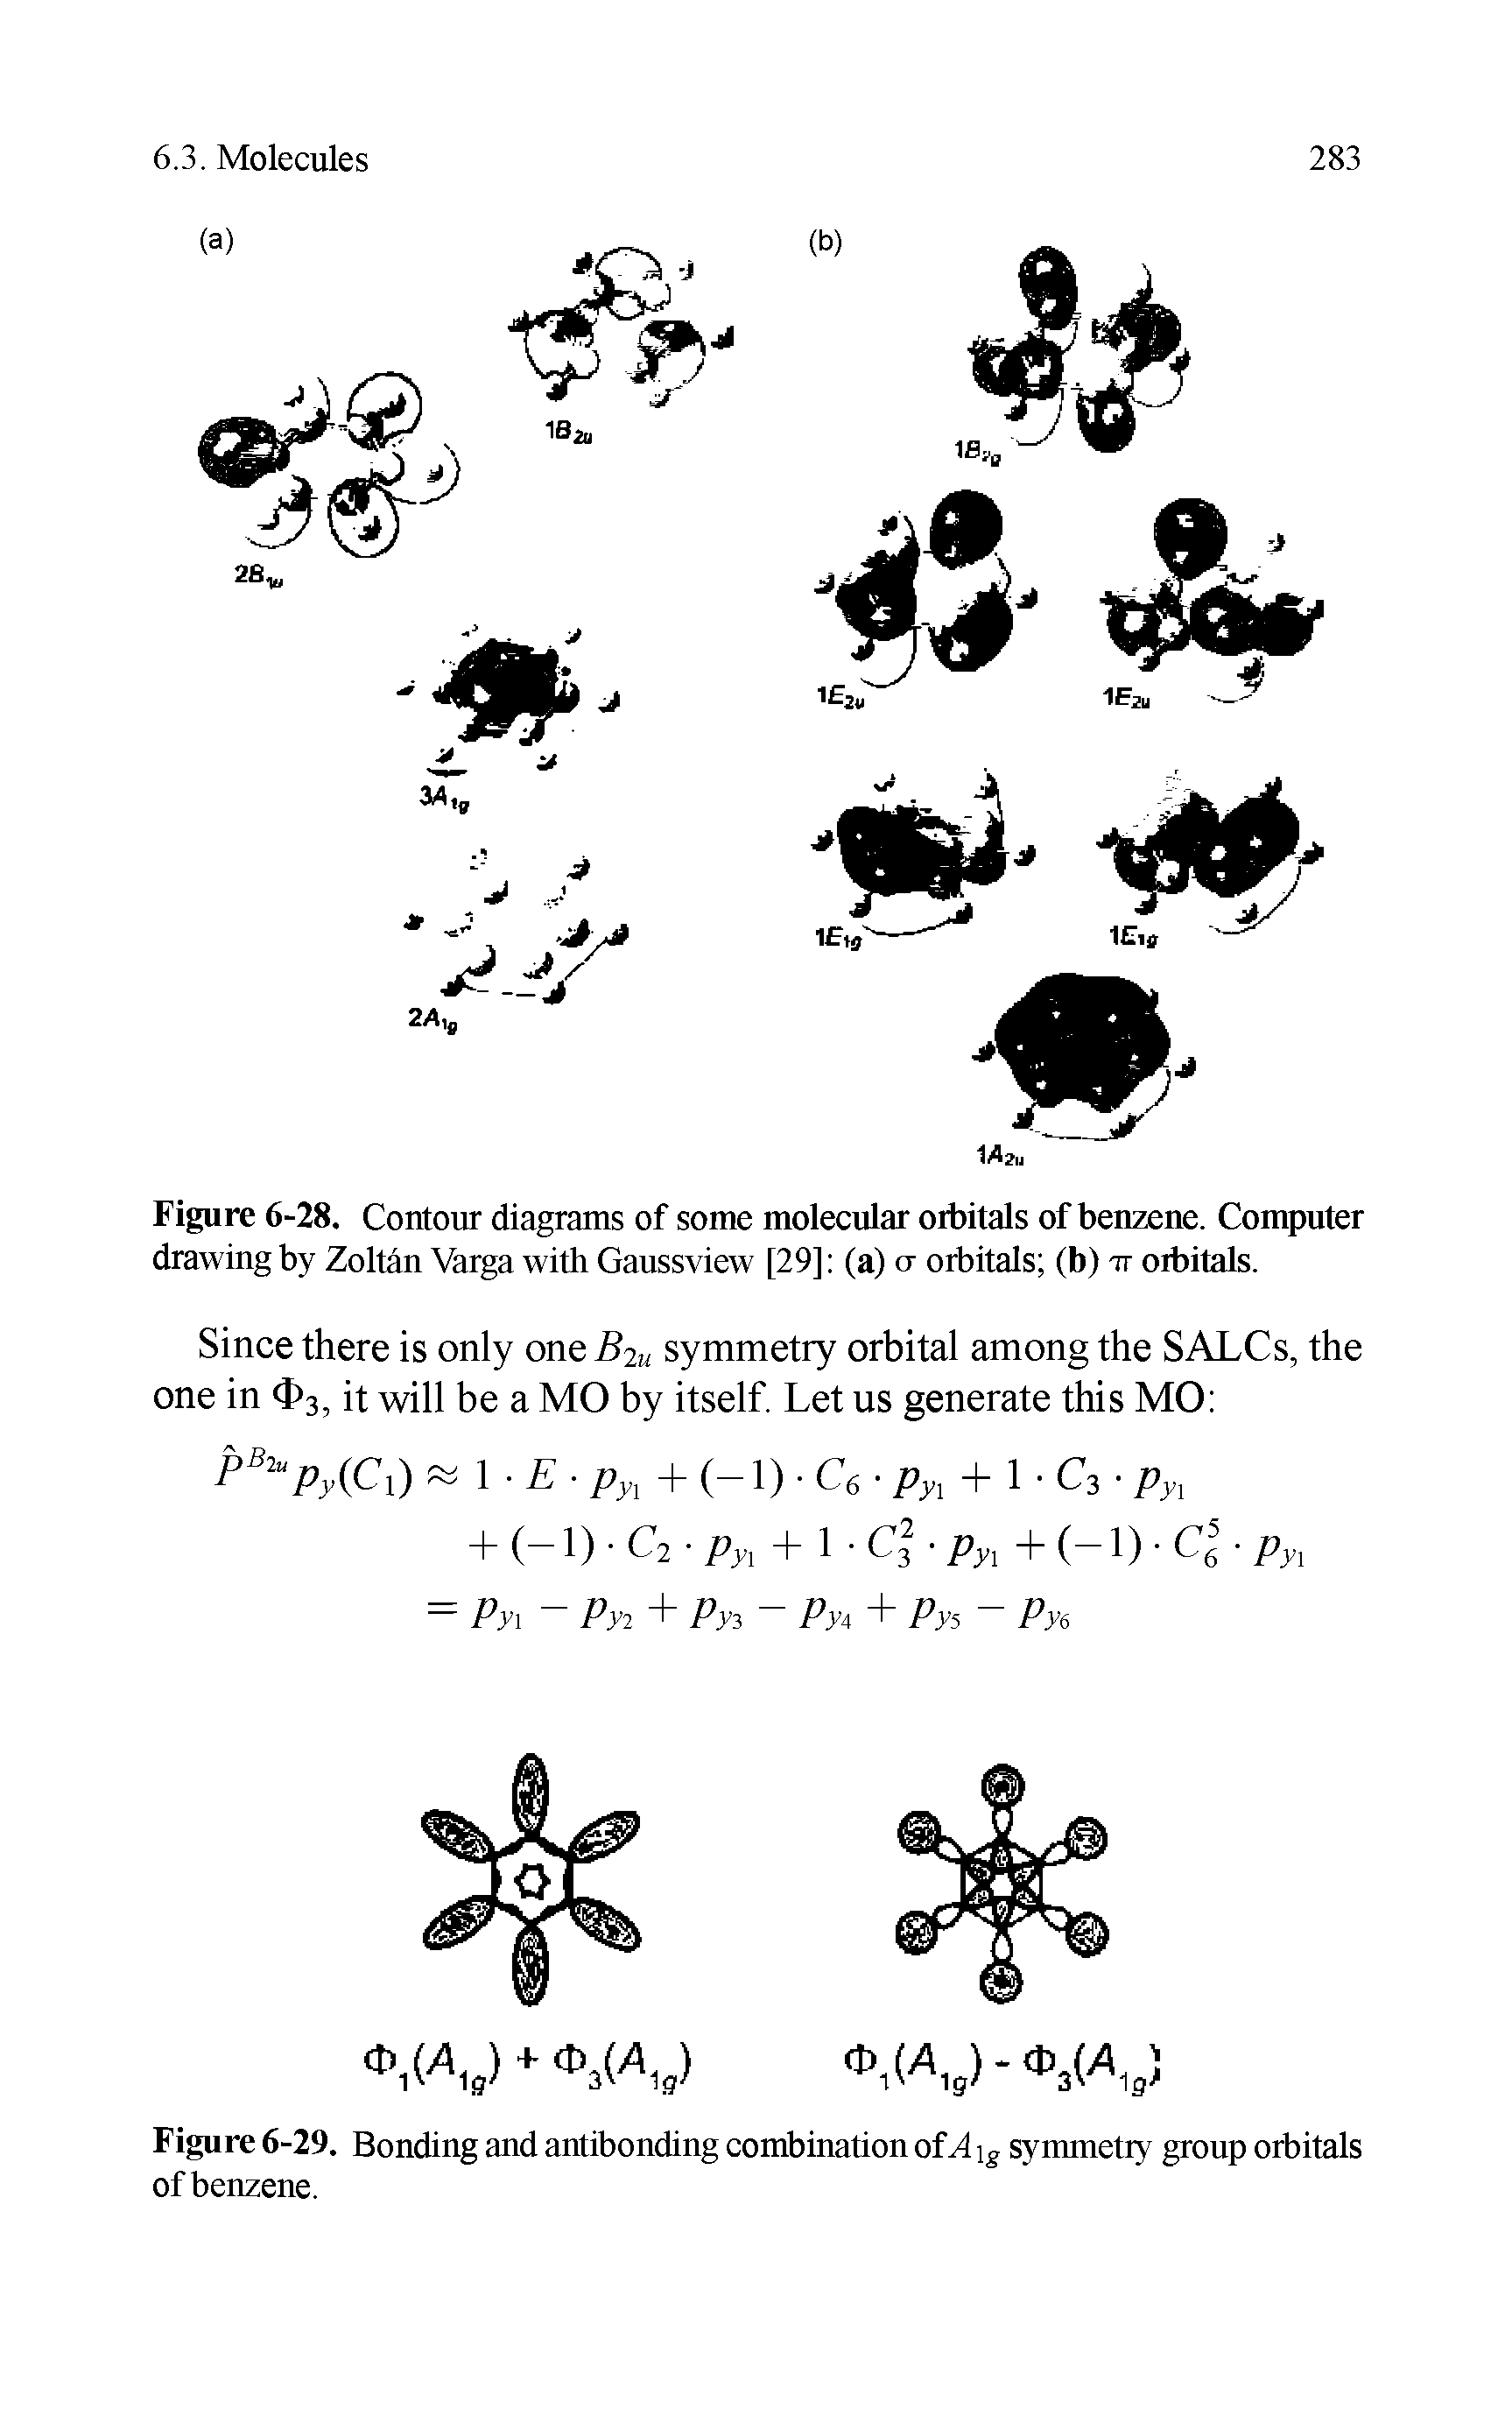 Figure 6-28. Contour diagrams of some molecular orbitals of benzene. Computer drawing by Zoltan Varga with Gaussview [29] (a) cr orbitals (b) tt orbitals.